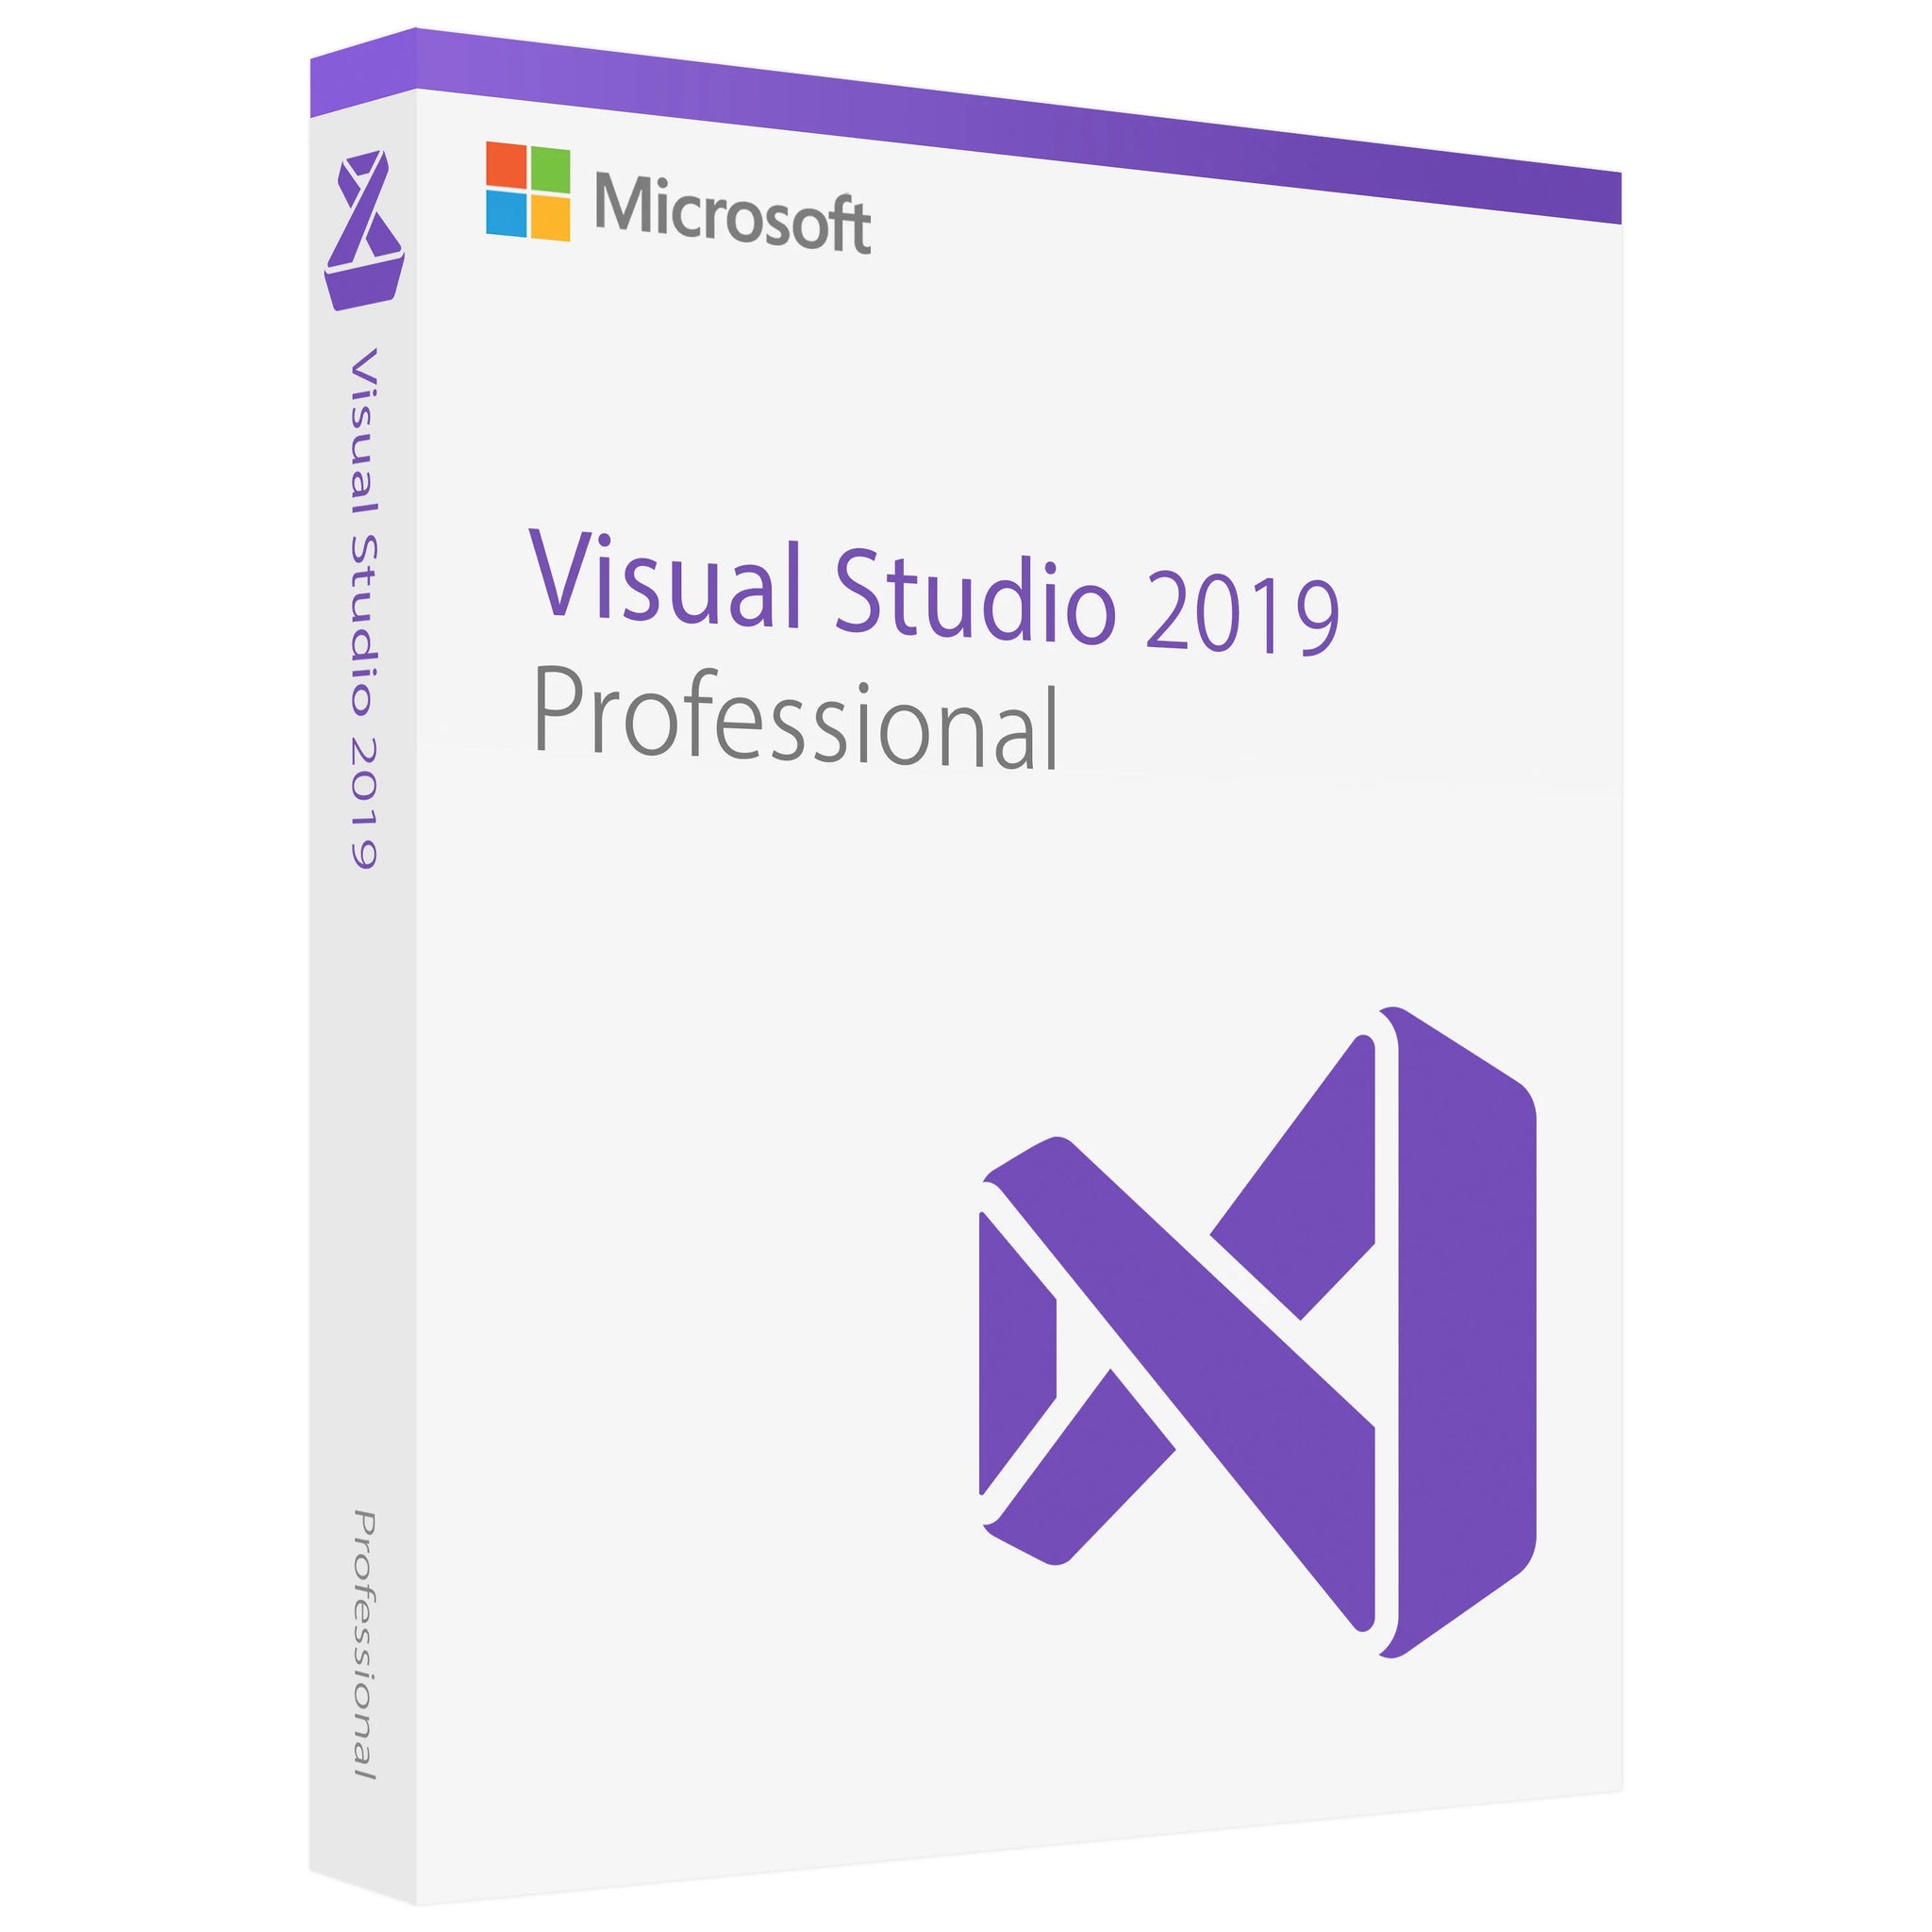 Microsoft Visual Studio 2019 Professional- Lifetime License Key